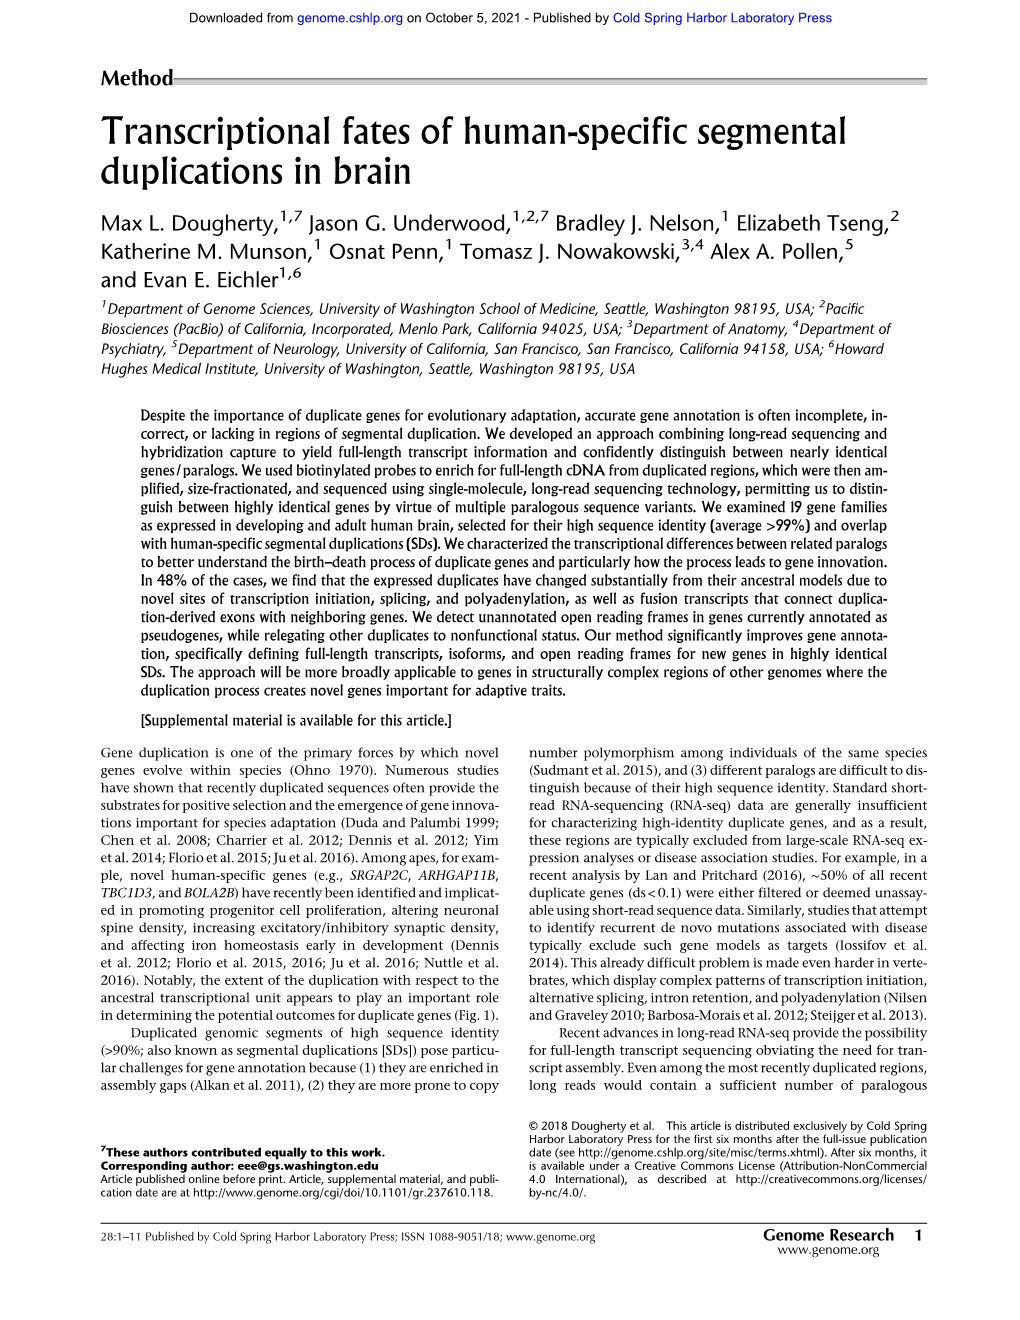 Transcriptional Fates of Human-Specific Segmental Duplications in Brain